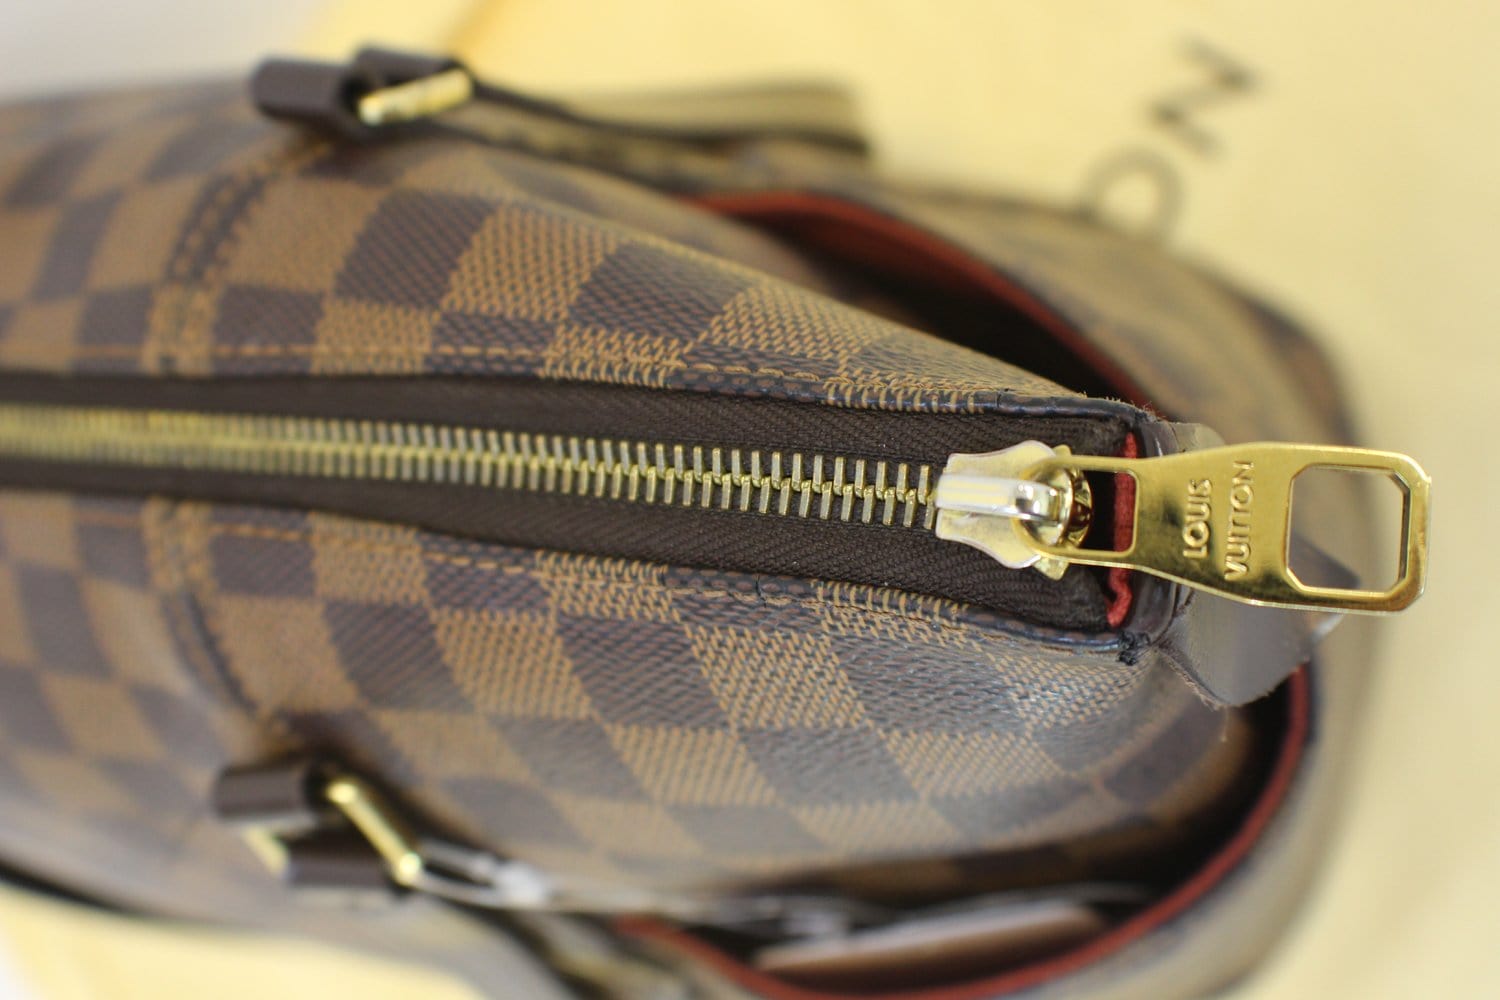 Louis-Vuitton-Damier-Totally-MM-Tote-Bag-Shoulder-Bag-N41281 – dct